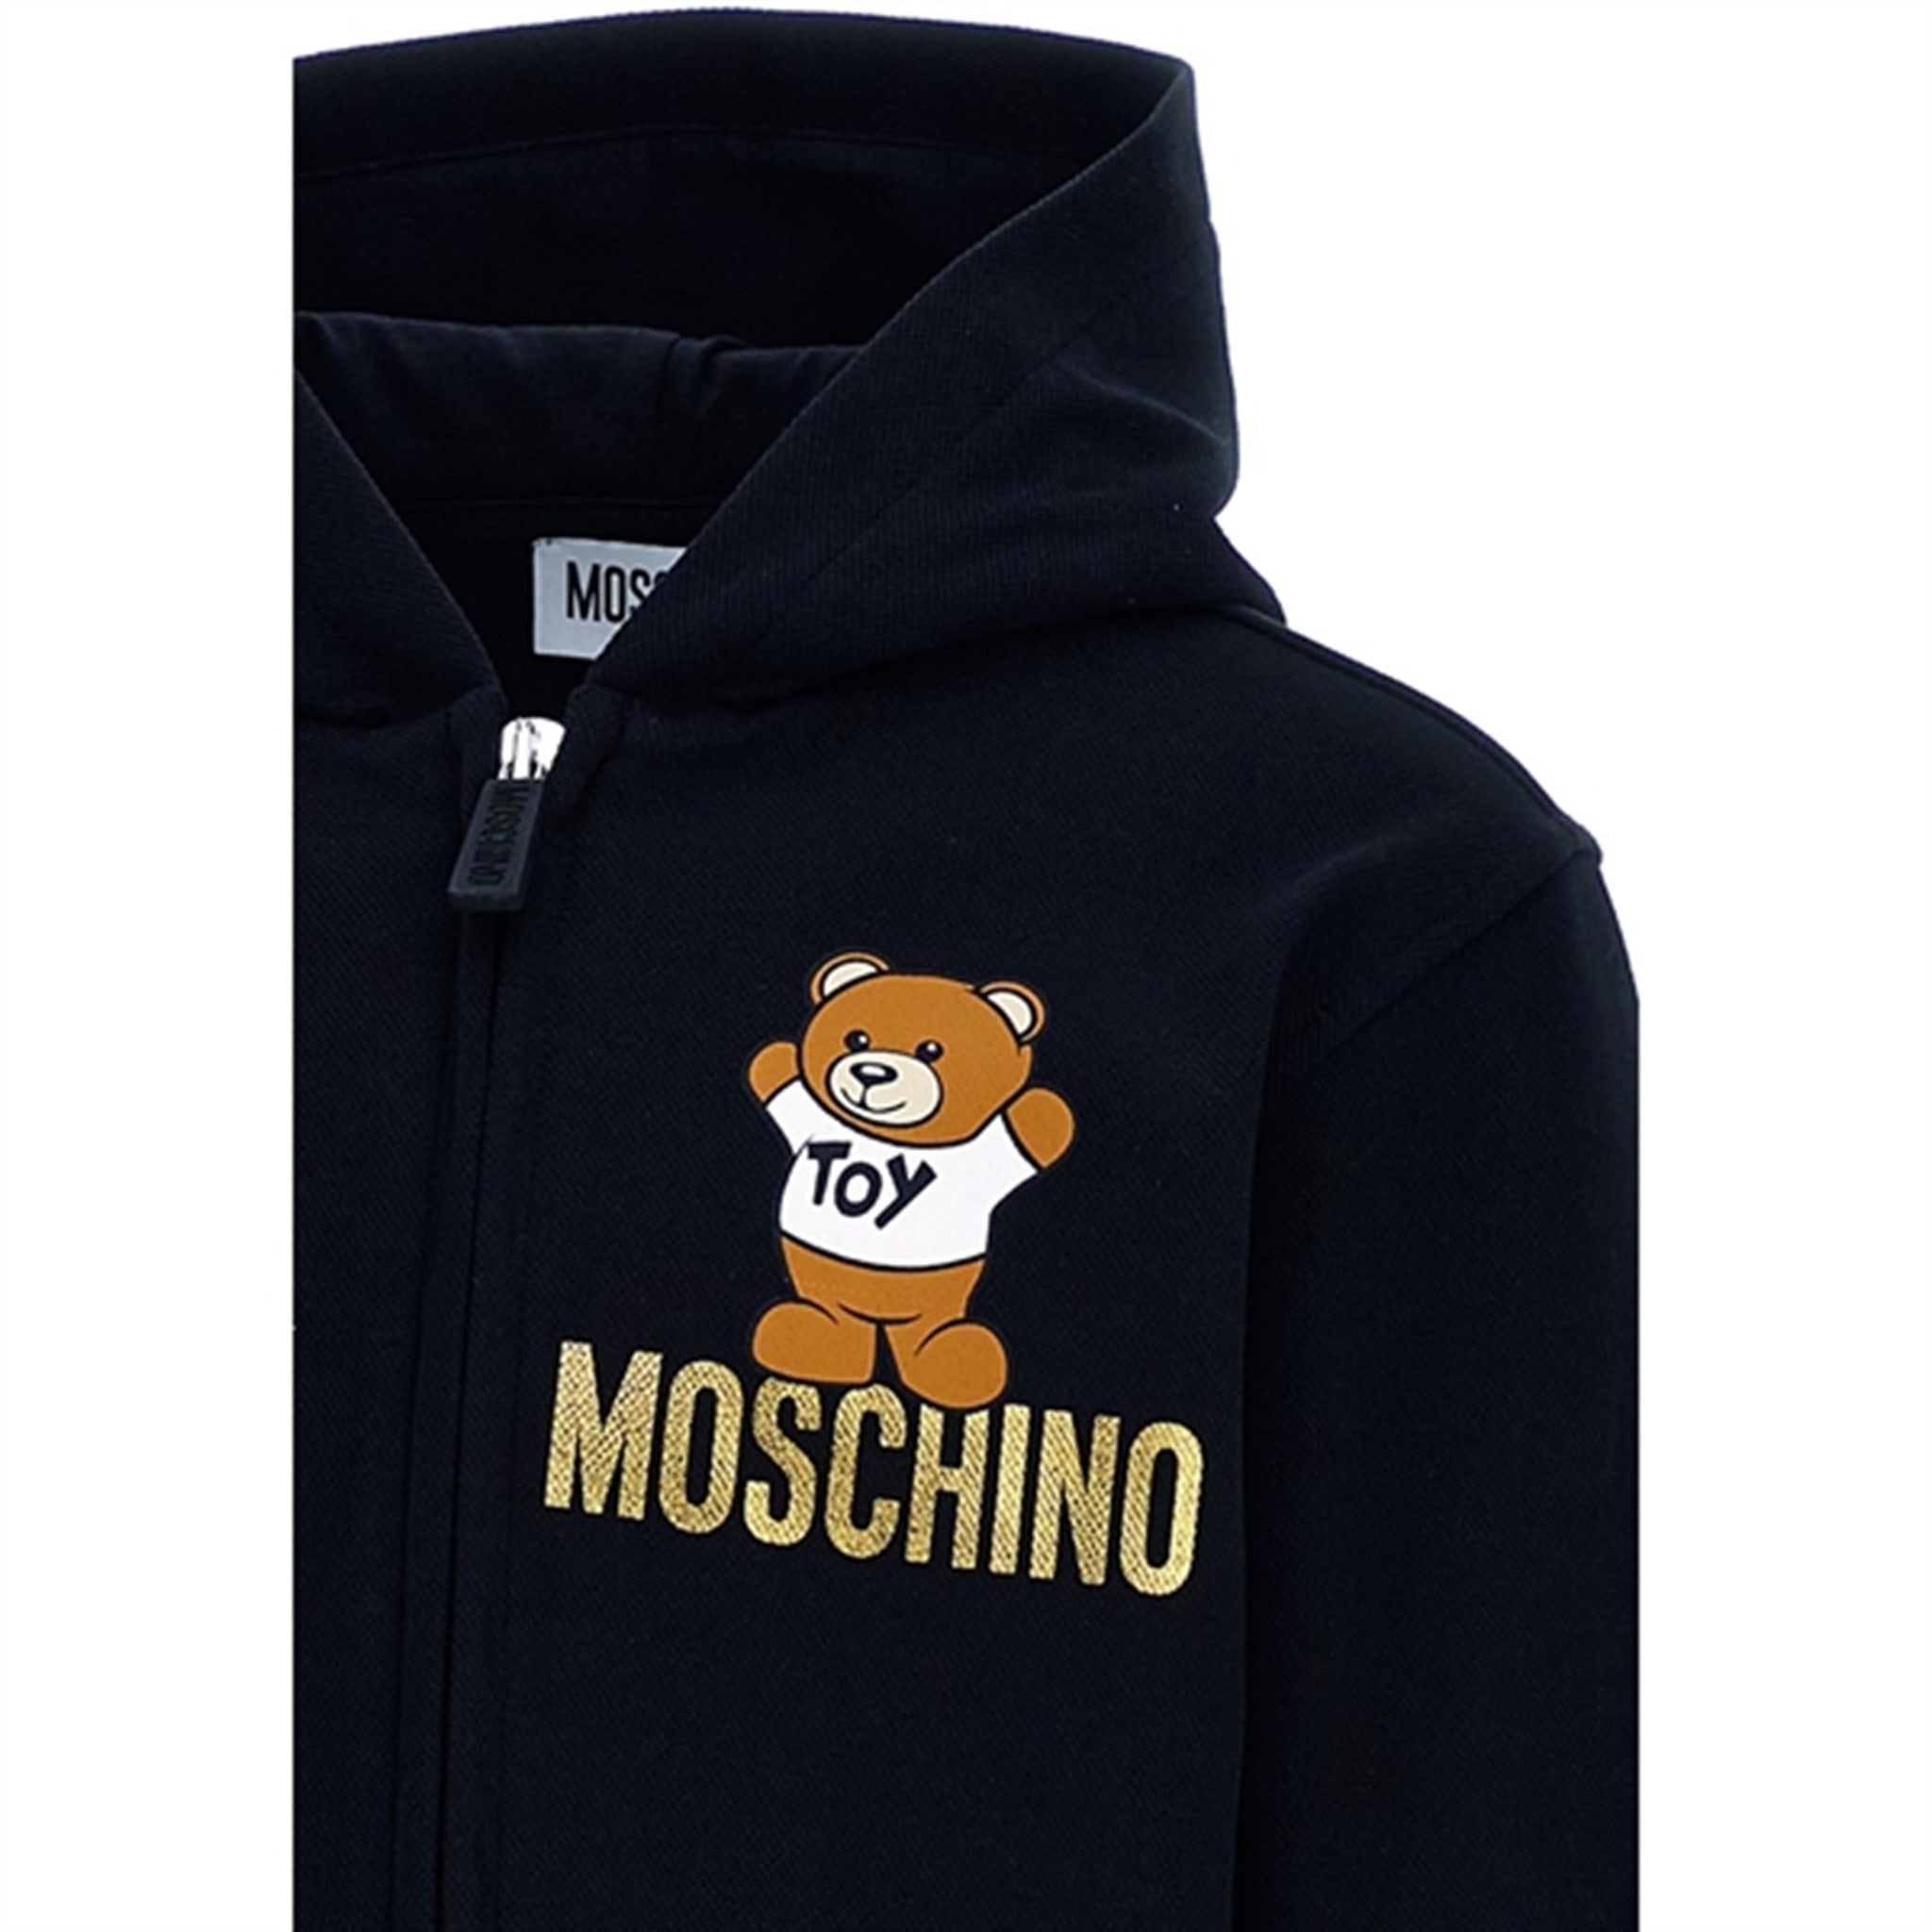 Moschino Black Sweatshirt w. Hood 2